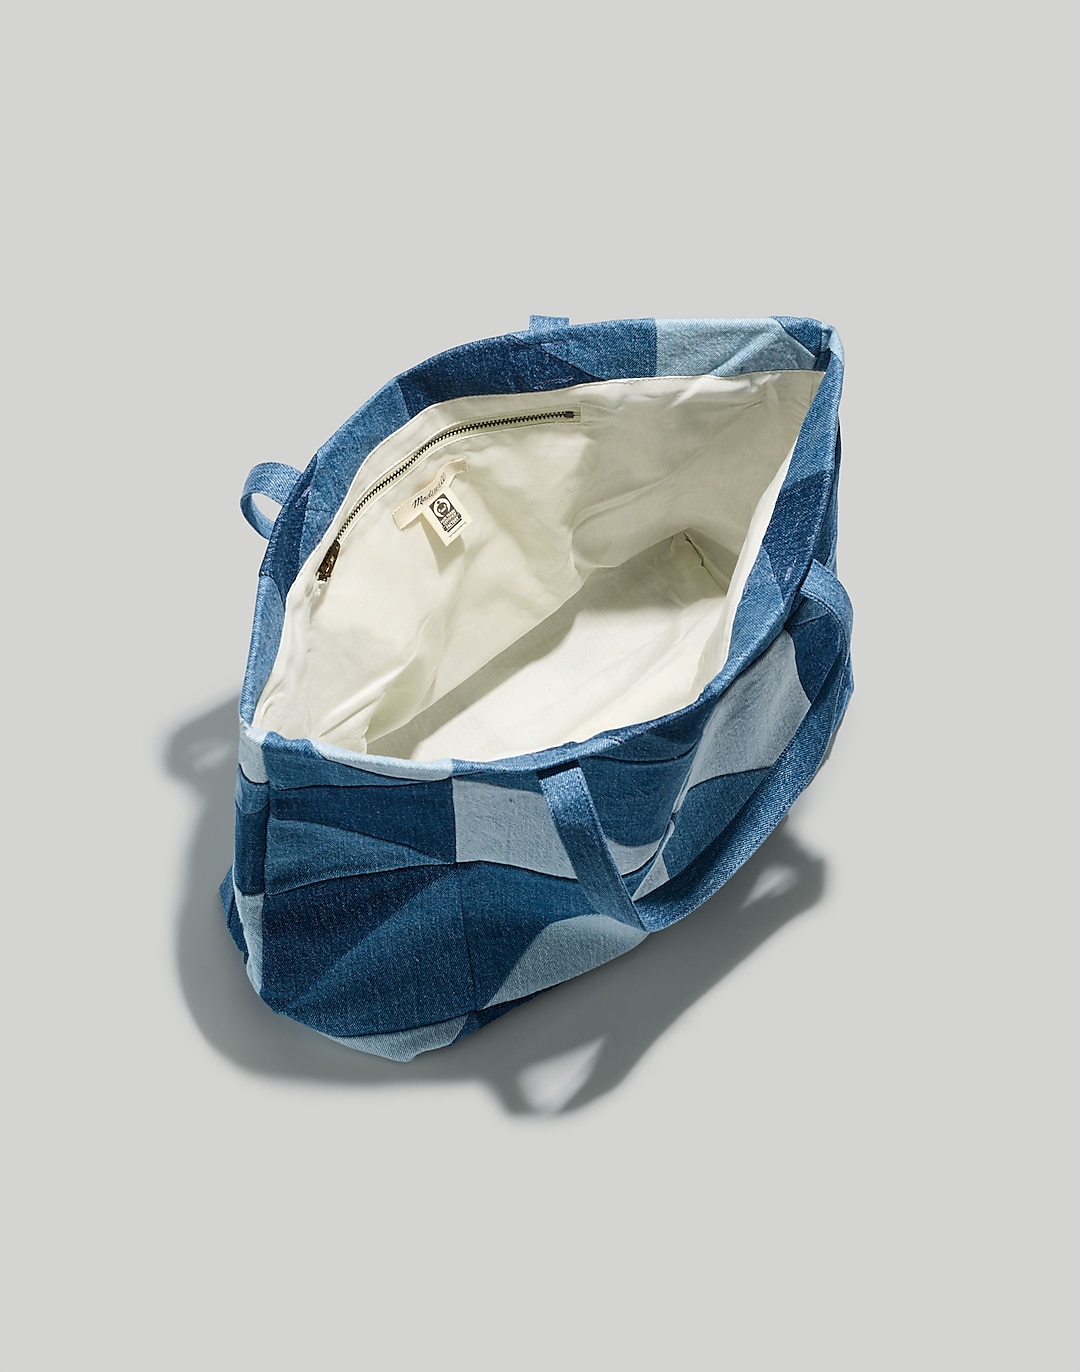 Madewell x REKUT Upcycled Denim Patchwork Tote Bag